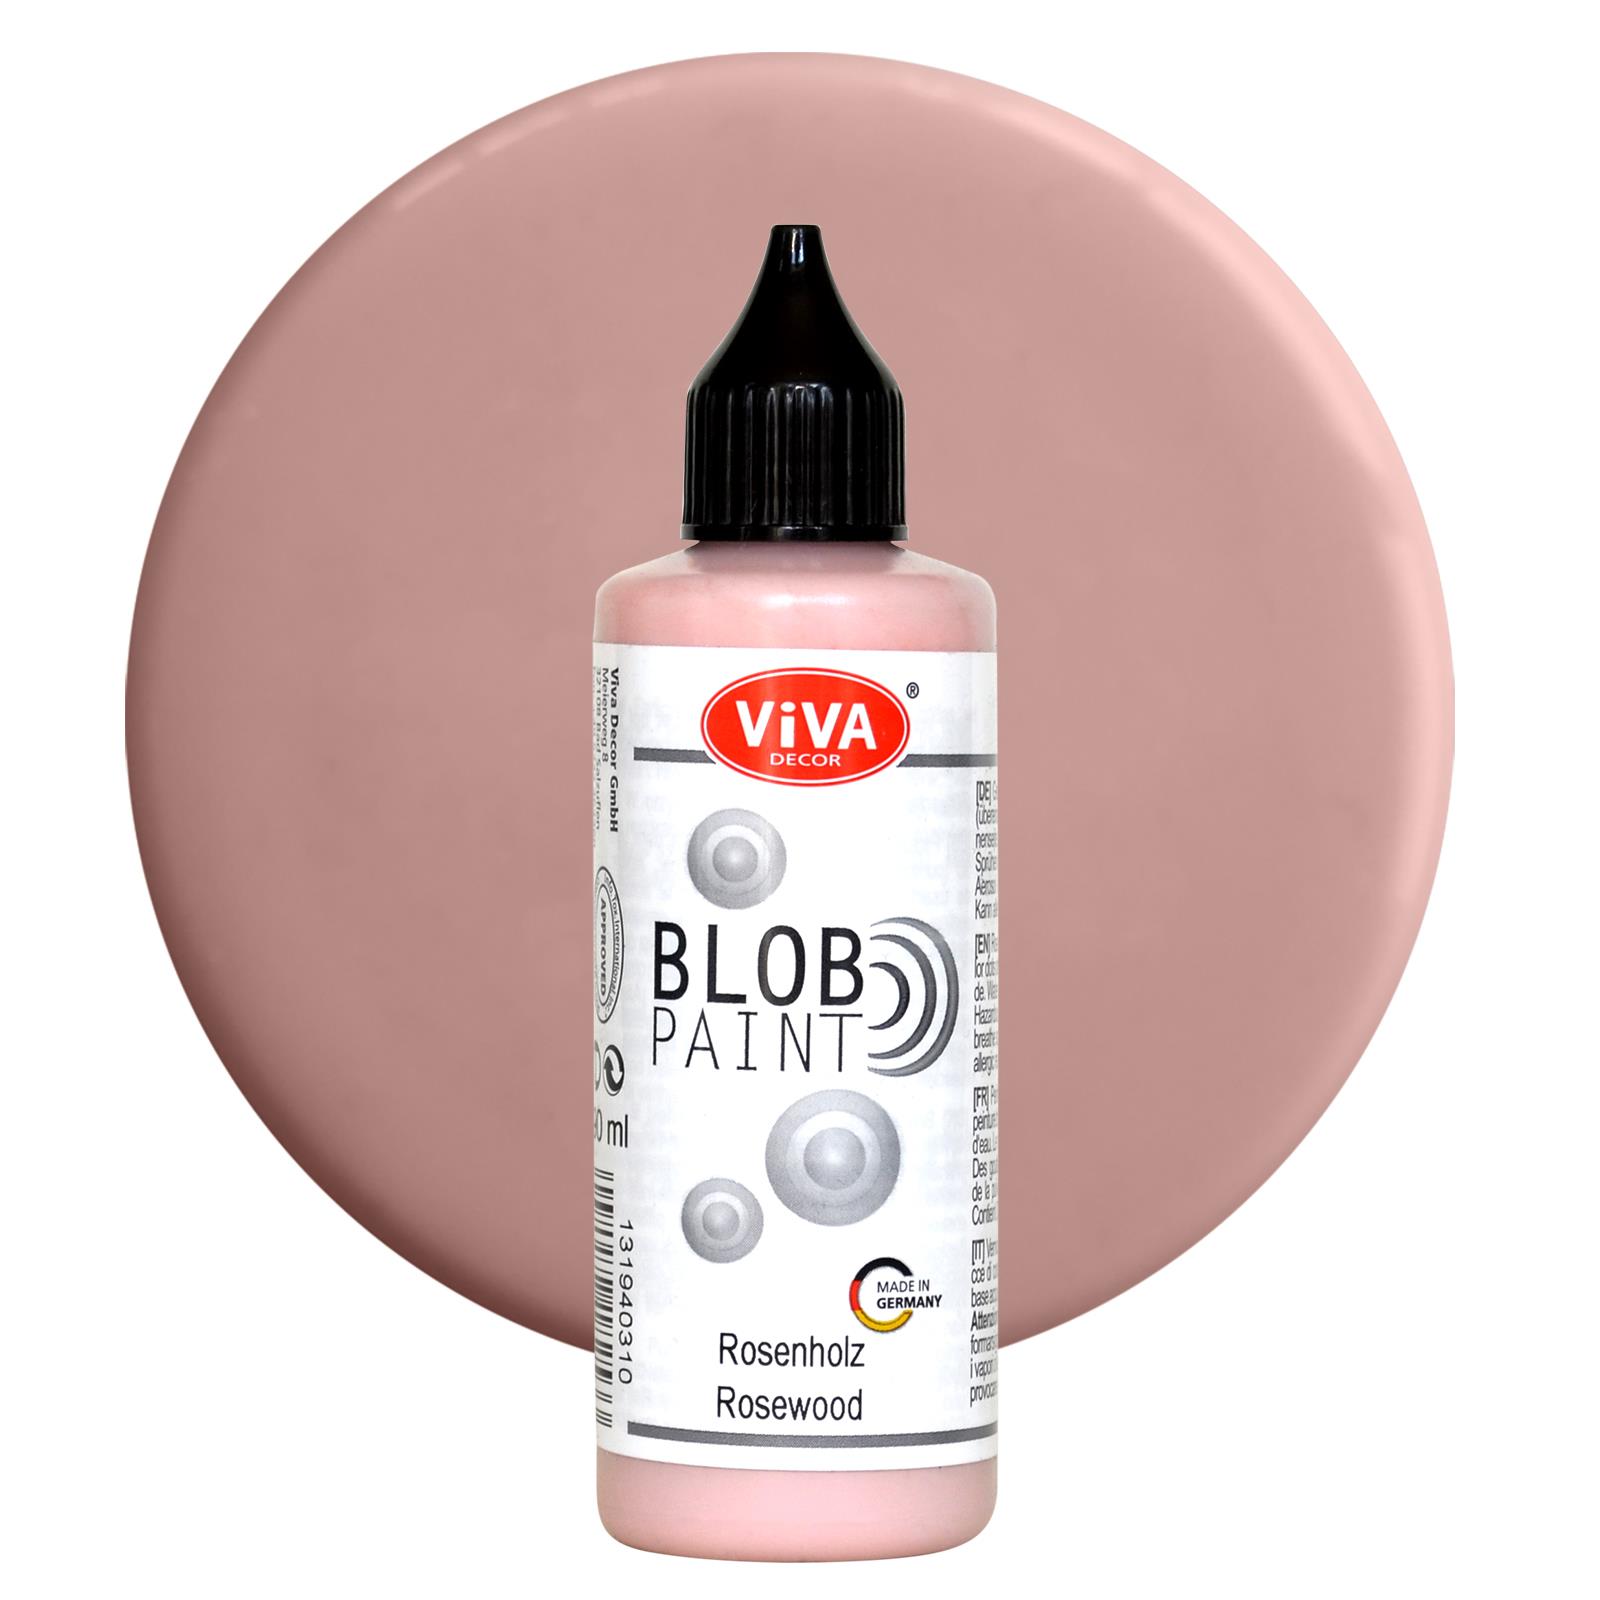 Blob pastell rosenholz